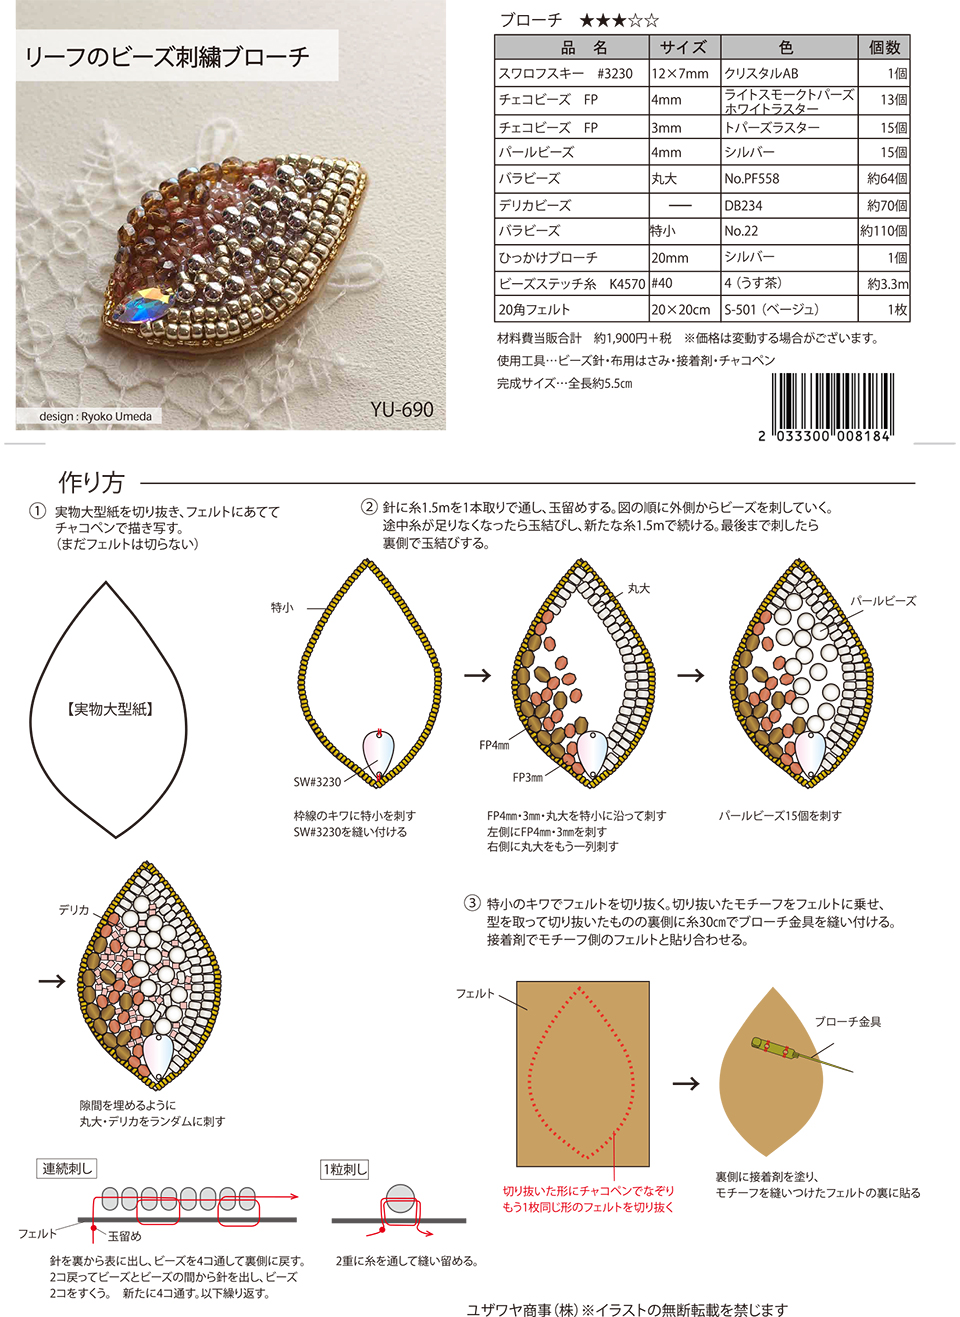 YU-690リーフのビーズ刺繍ブローチ_1.jpg